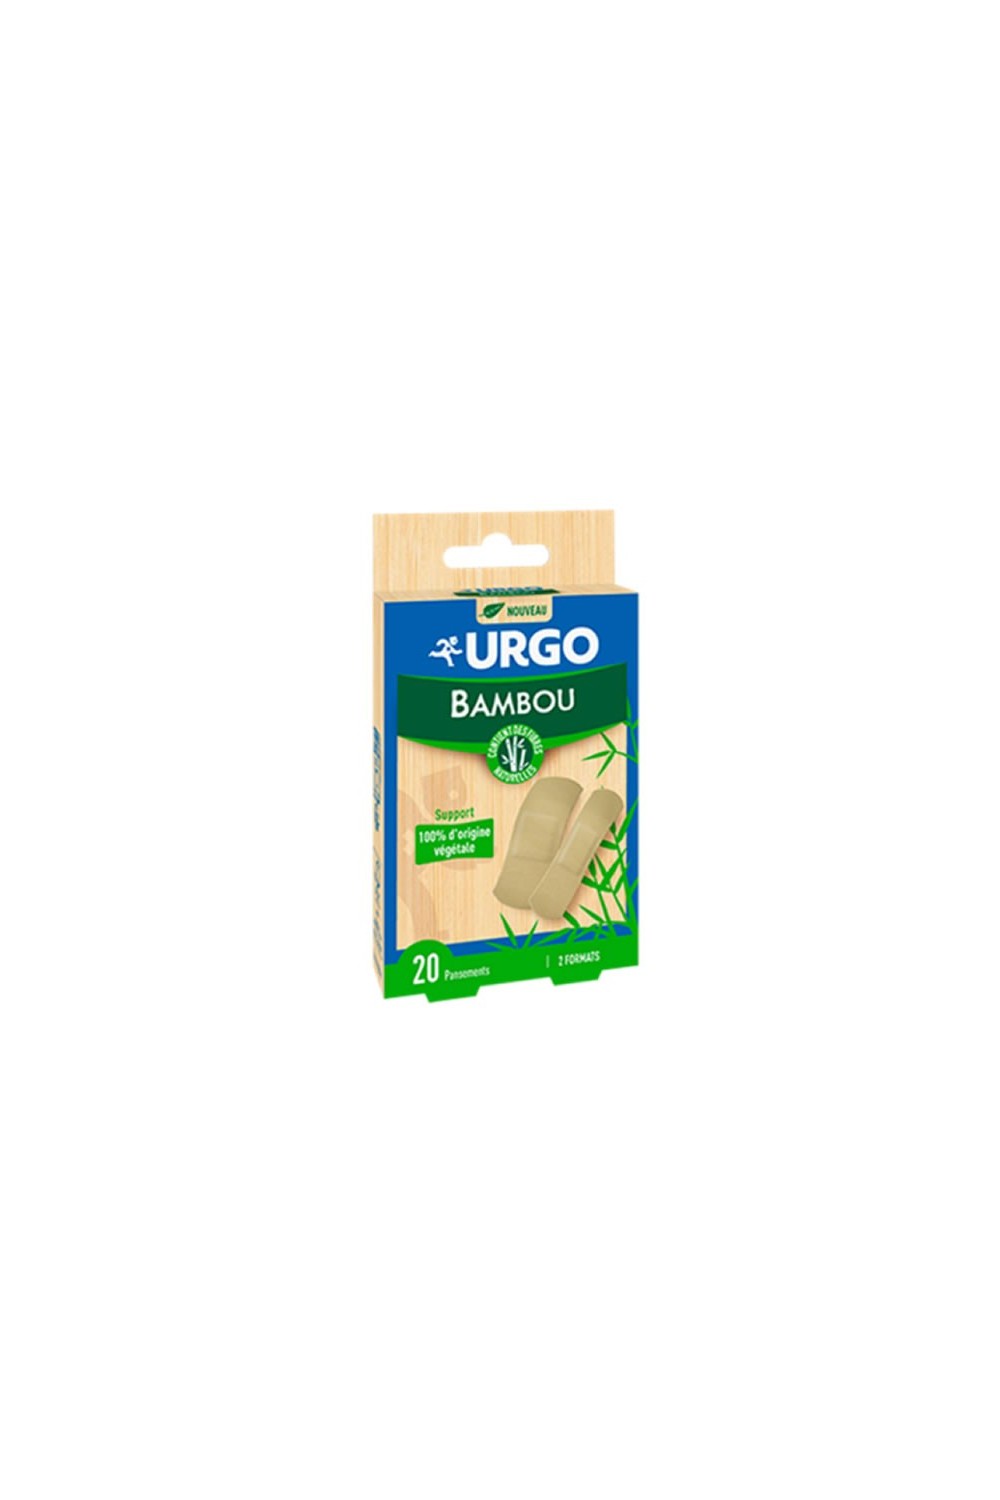 Urgo Bamboo 20 Dressings